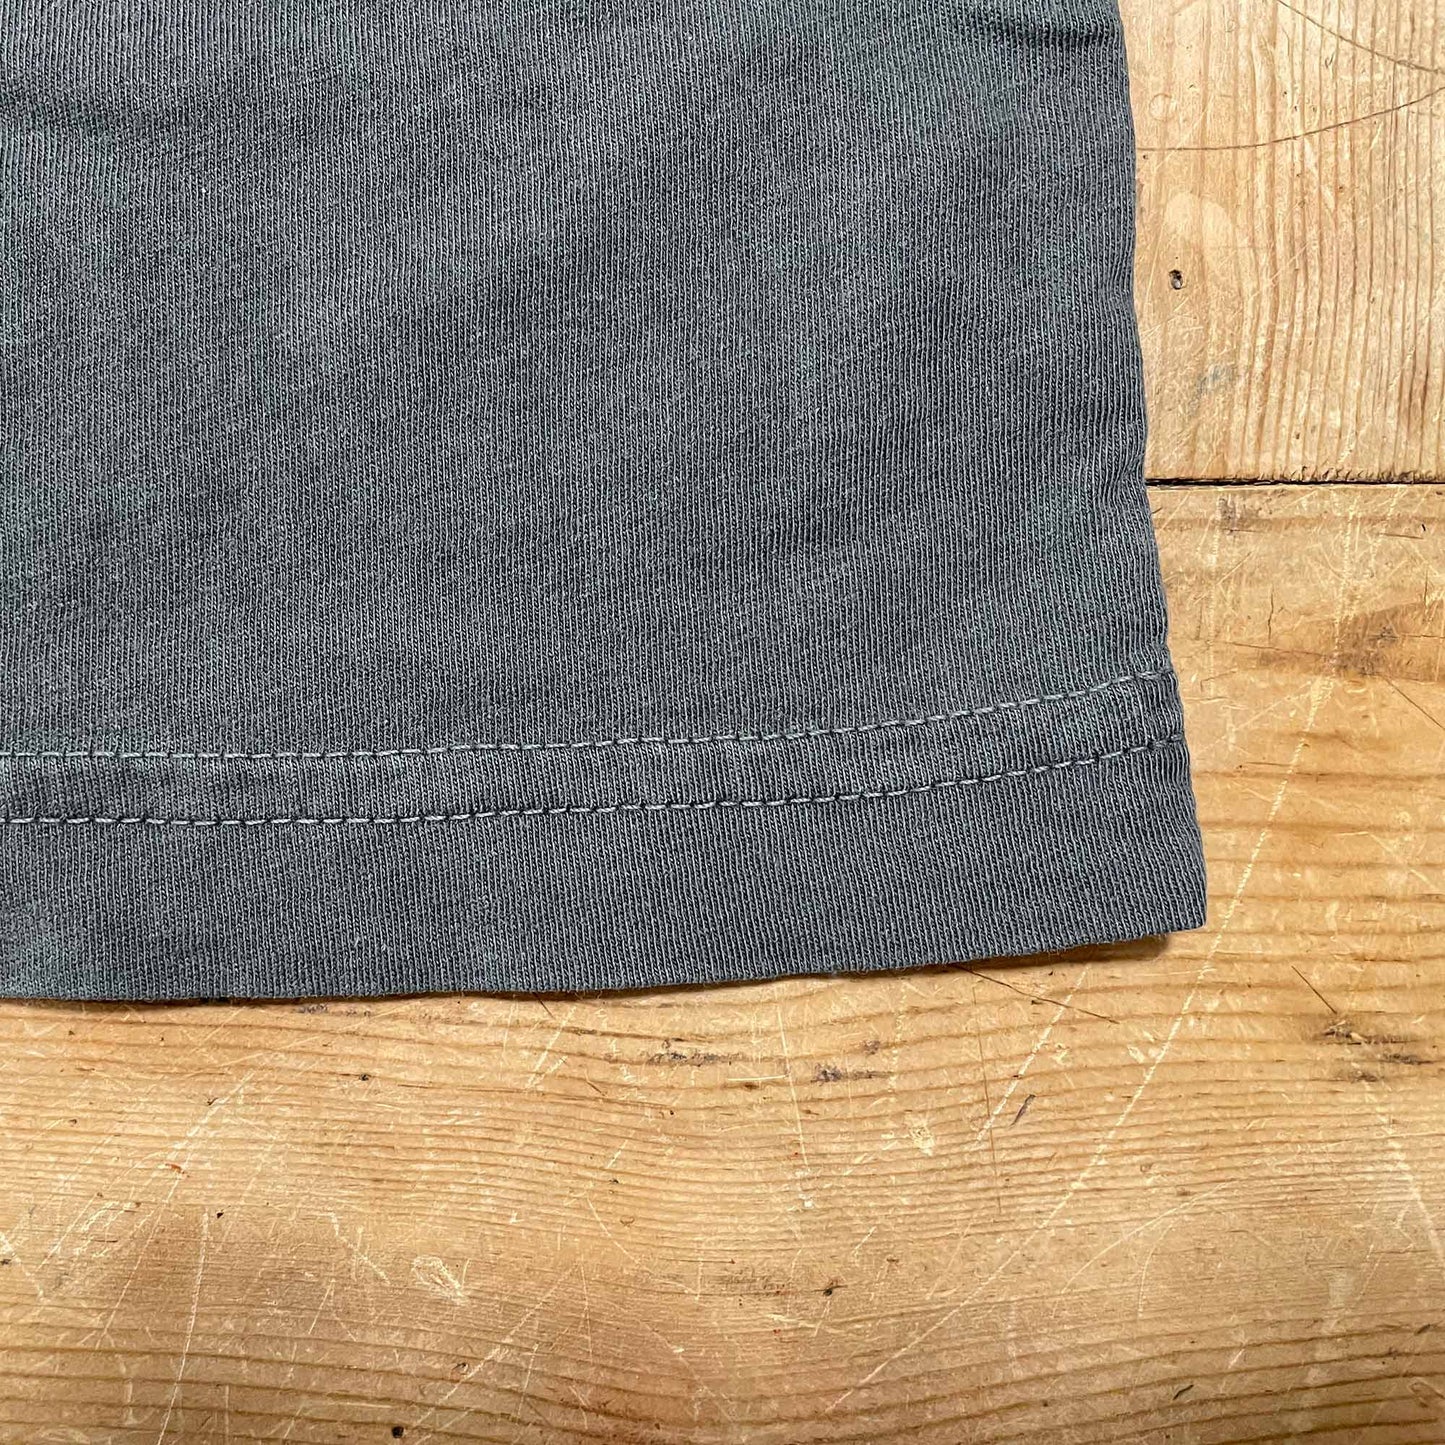 Joshua Tree T-Shirt - USA Made | 100% Cotton: XXL / Black